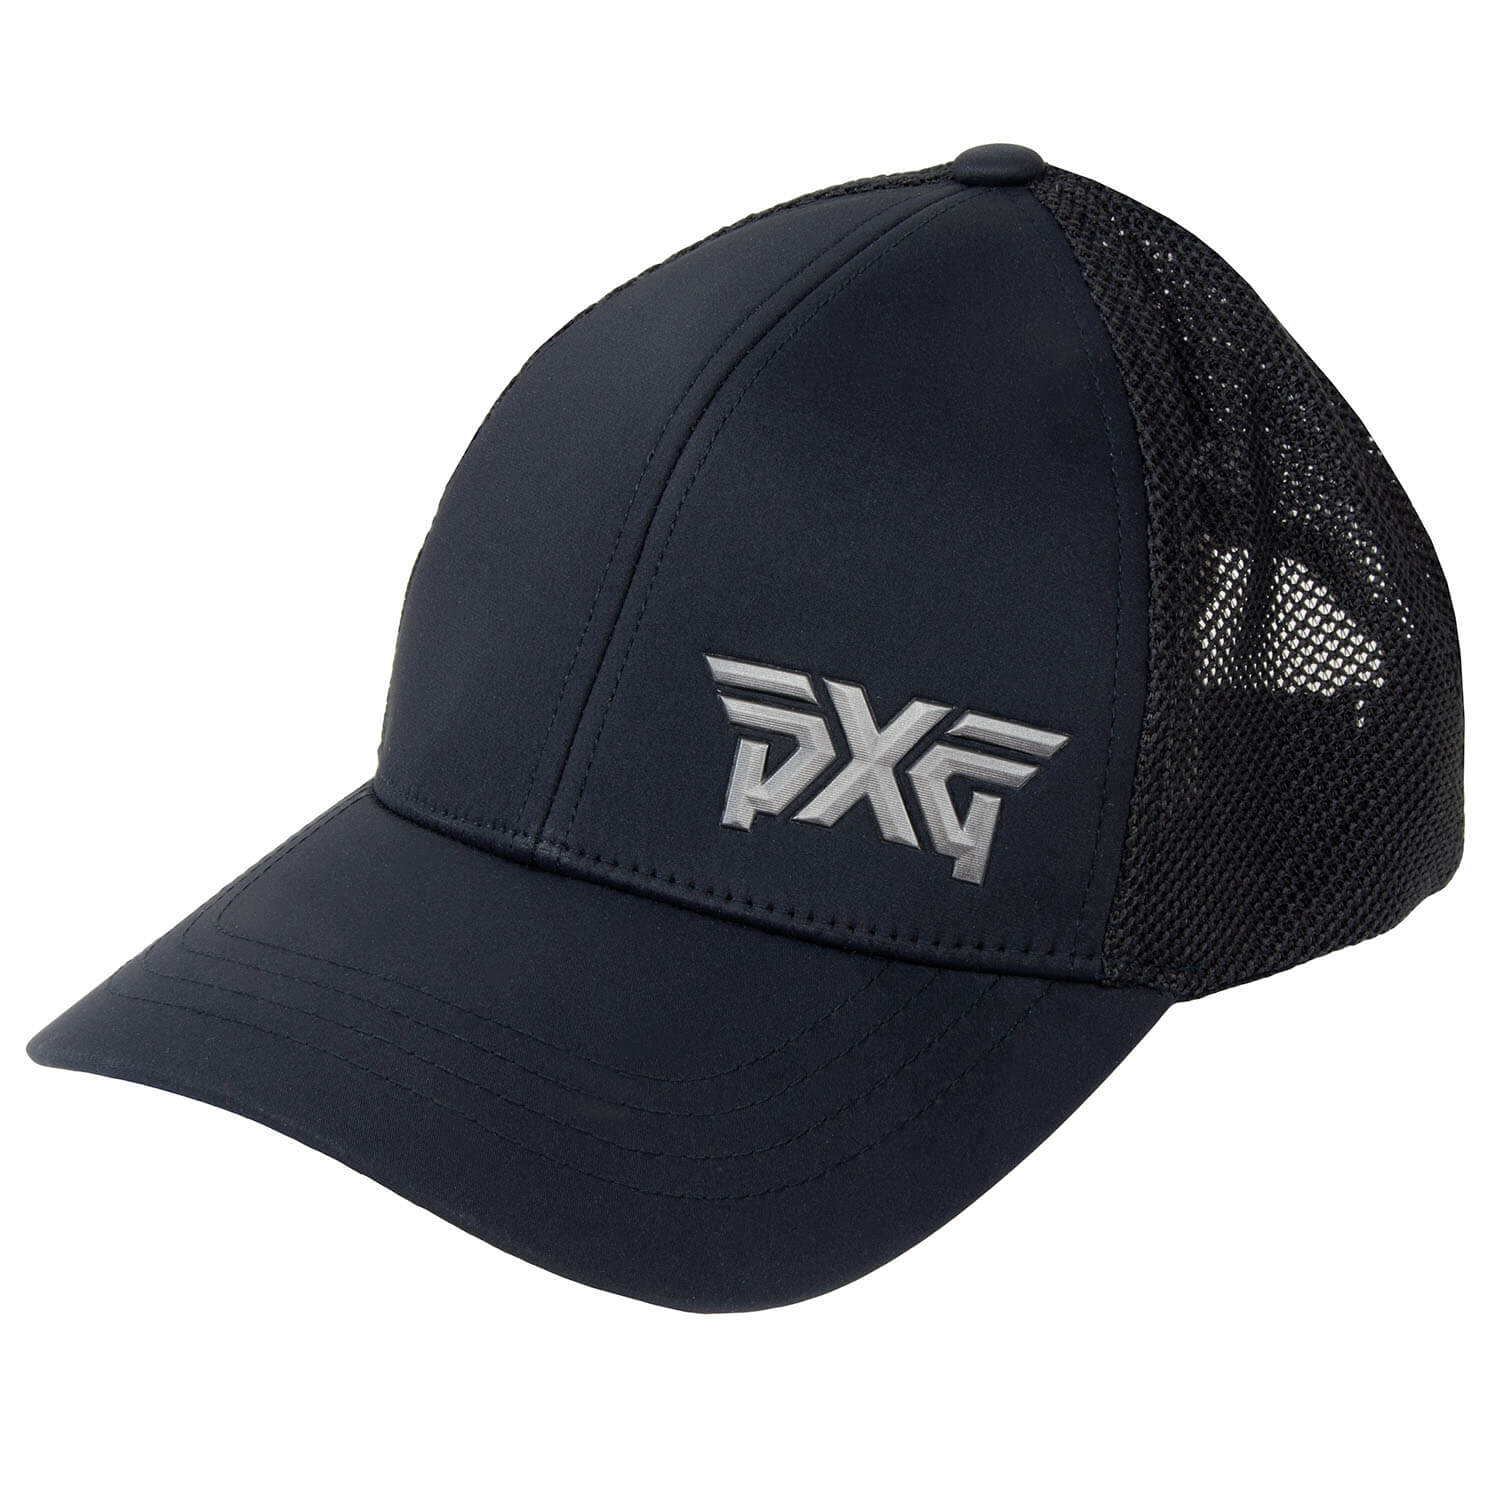 PXG Small Logo Trucker S Fit Baseball Cap